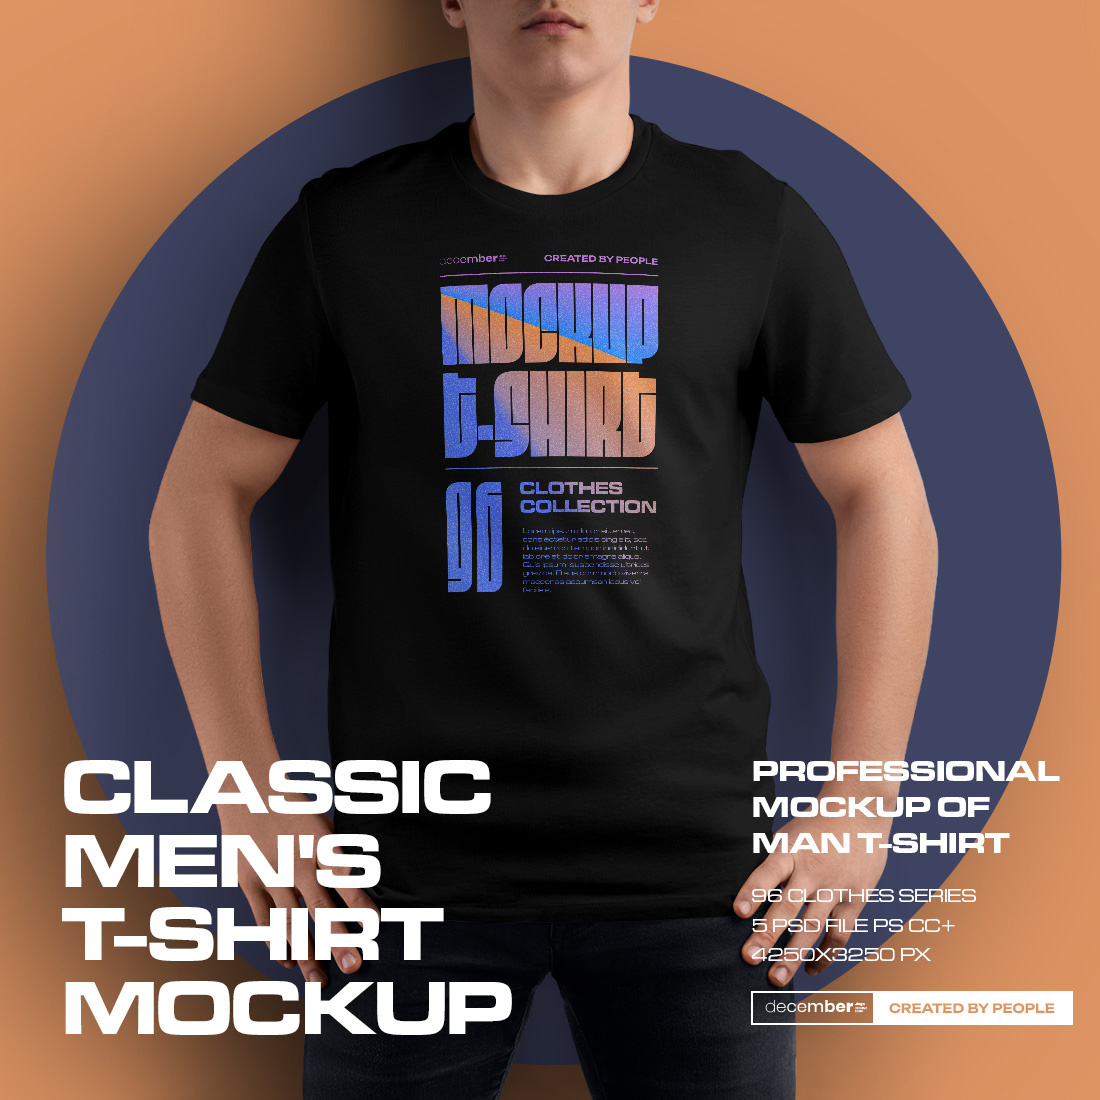 5 Mockups Man T-Shirt cover image.